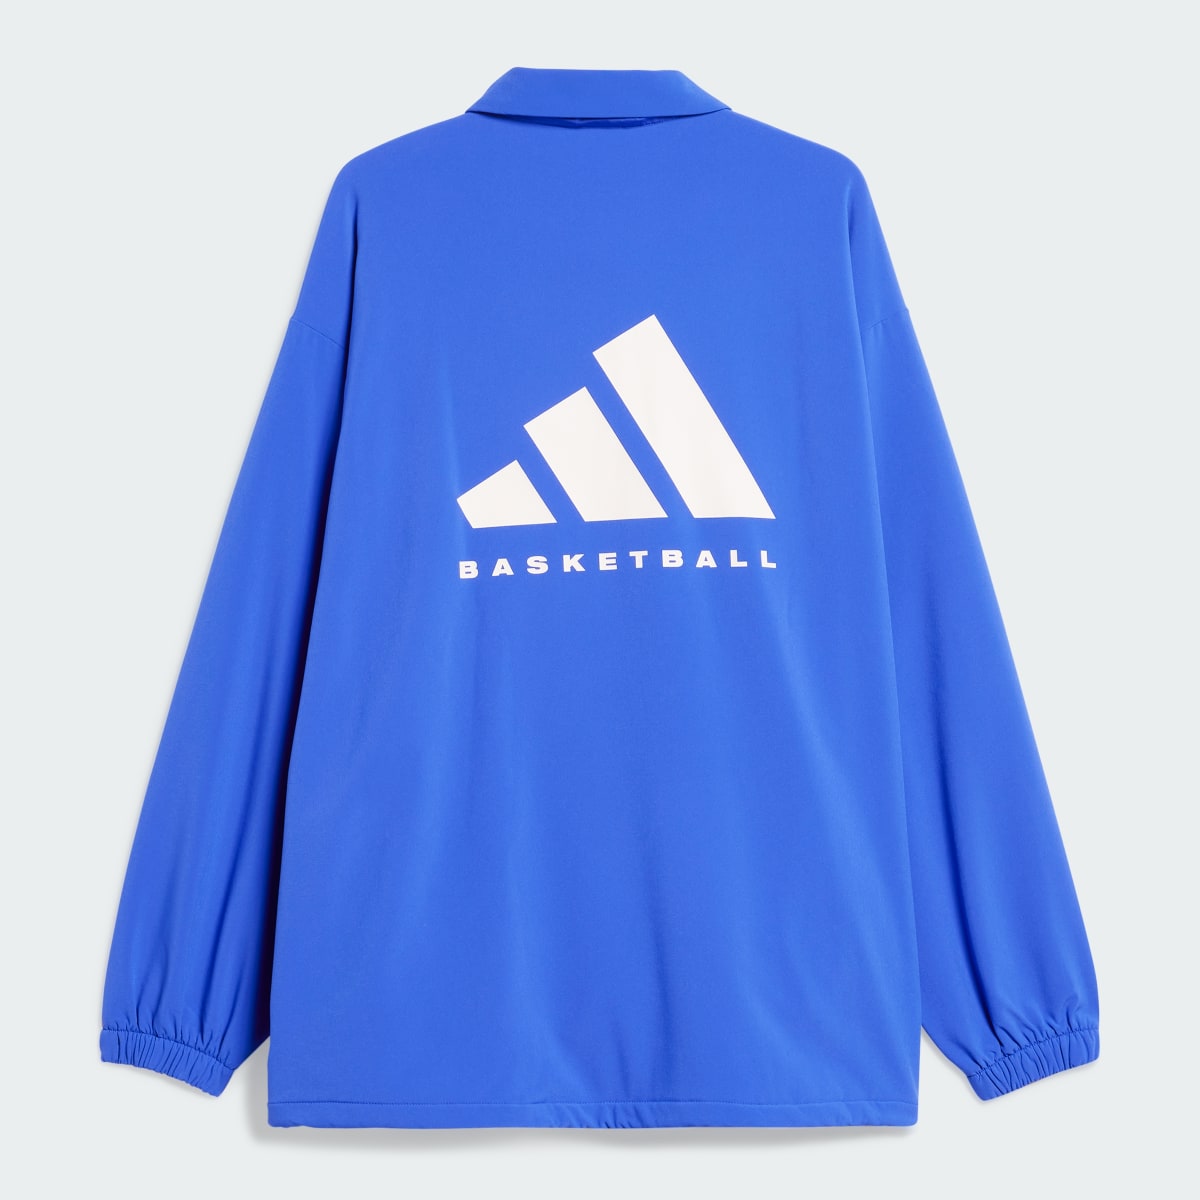 Adidas Coach jacket adidas Basketball. 5